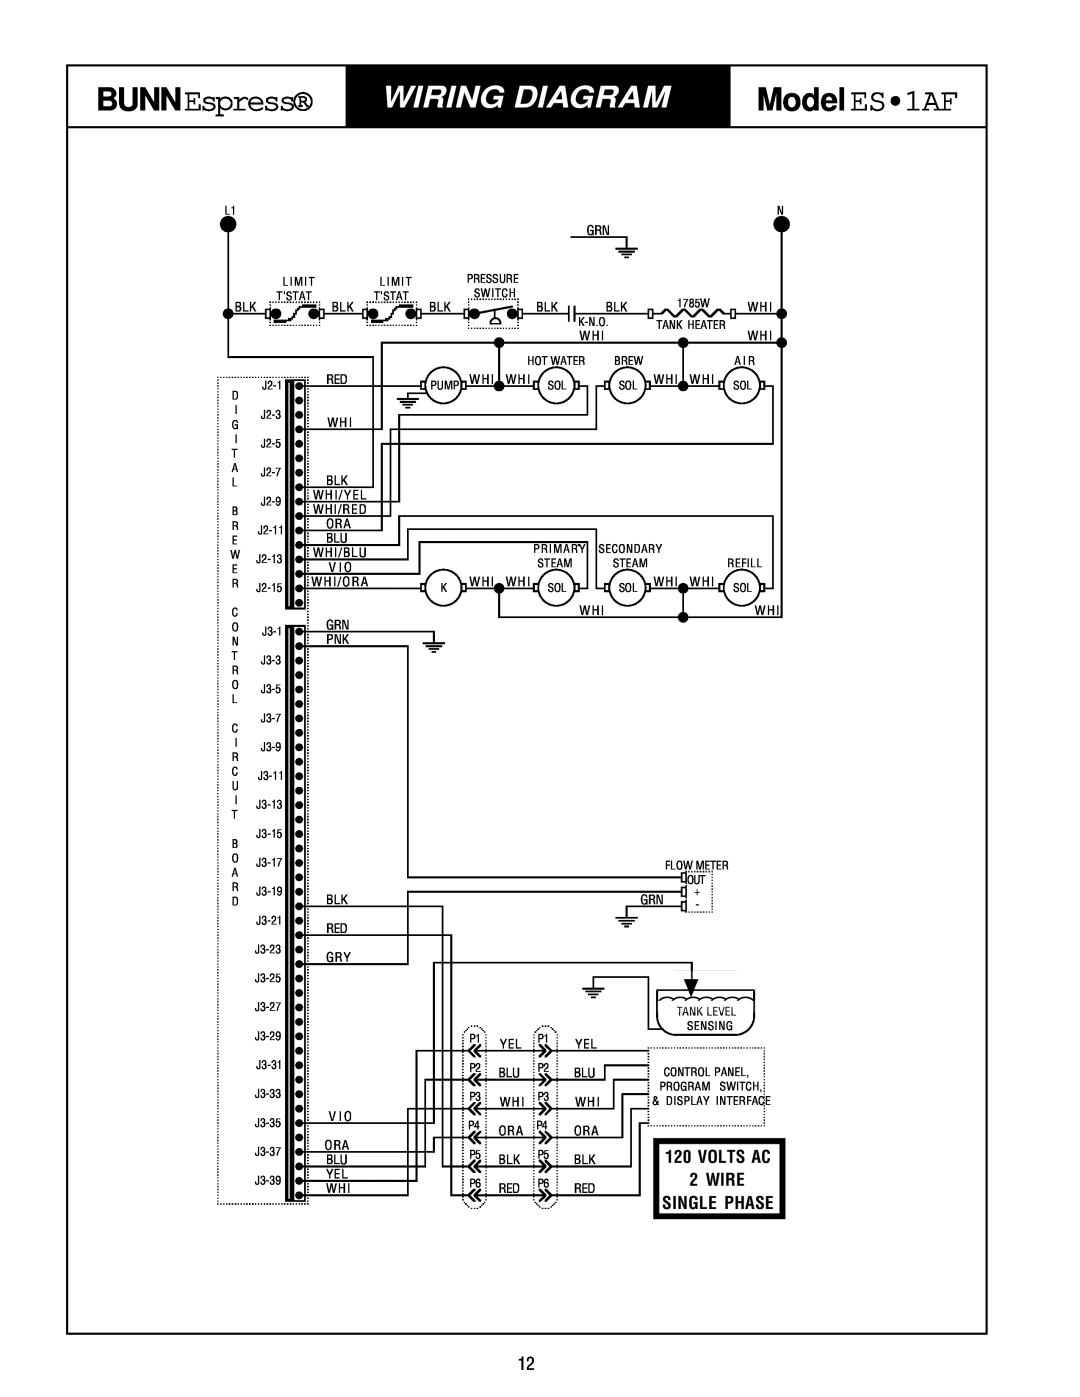 Bunn service manual Wiring Diagram, BUNNEspress, Model ES1AF, Volts Ac, Wire, Single Phase 